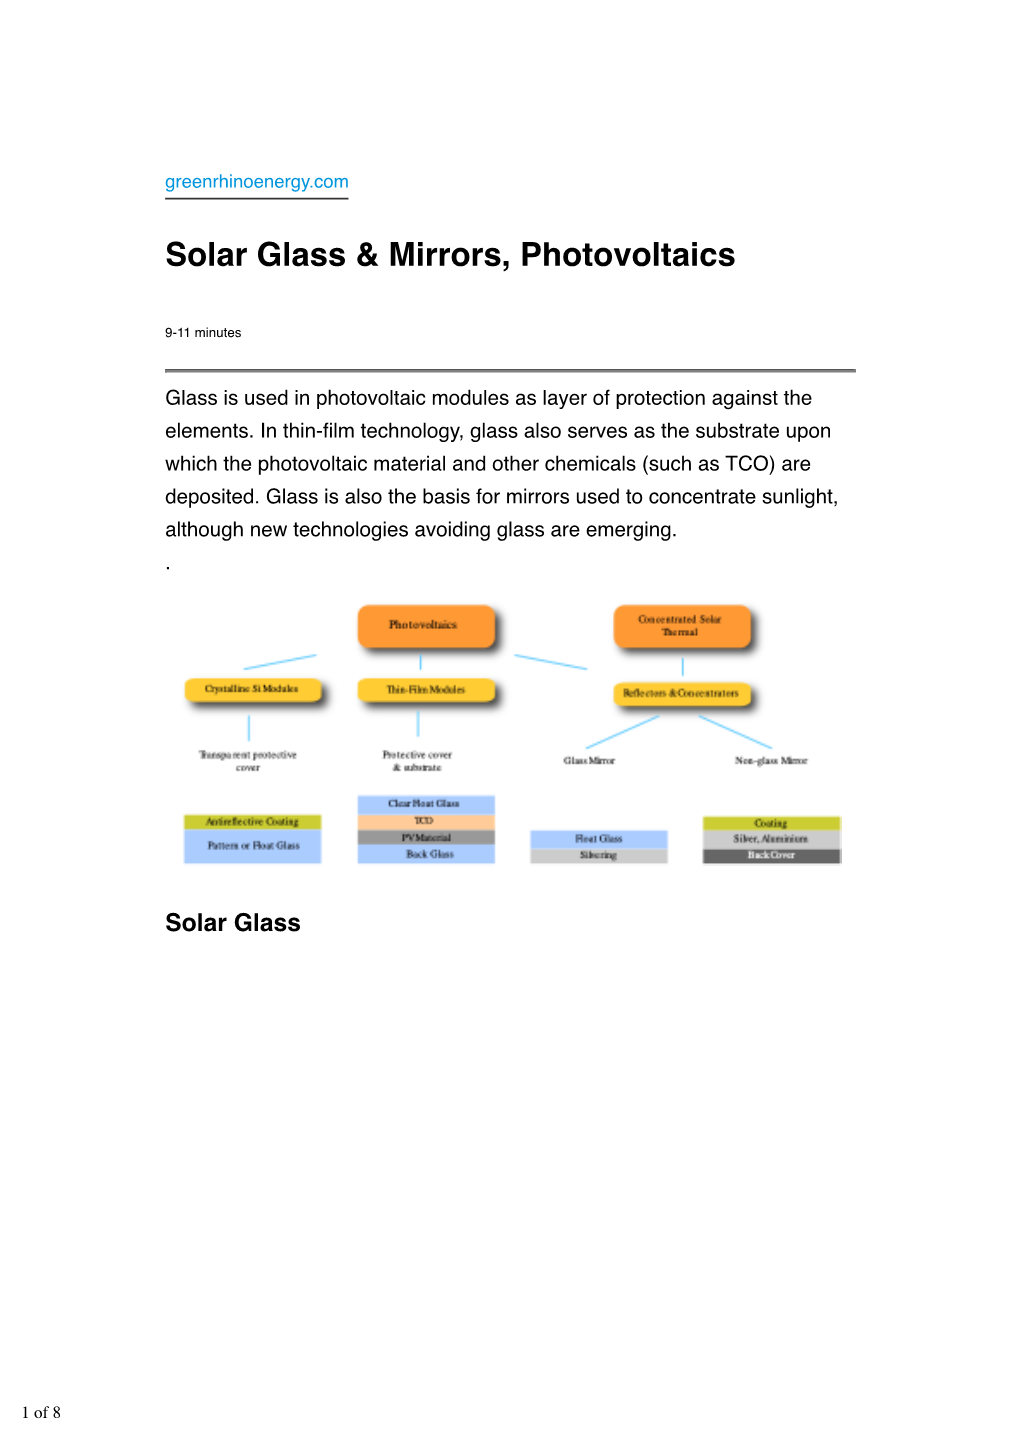 Solar Glass & Mirrors, Photovoltaics